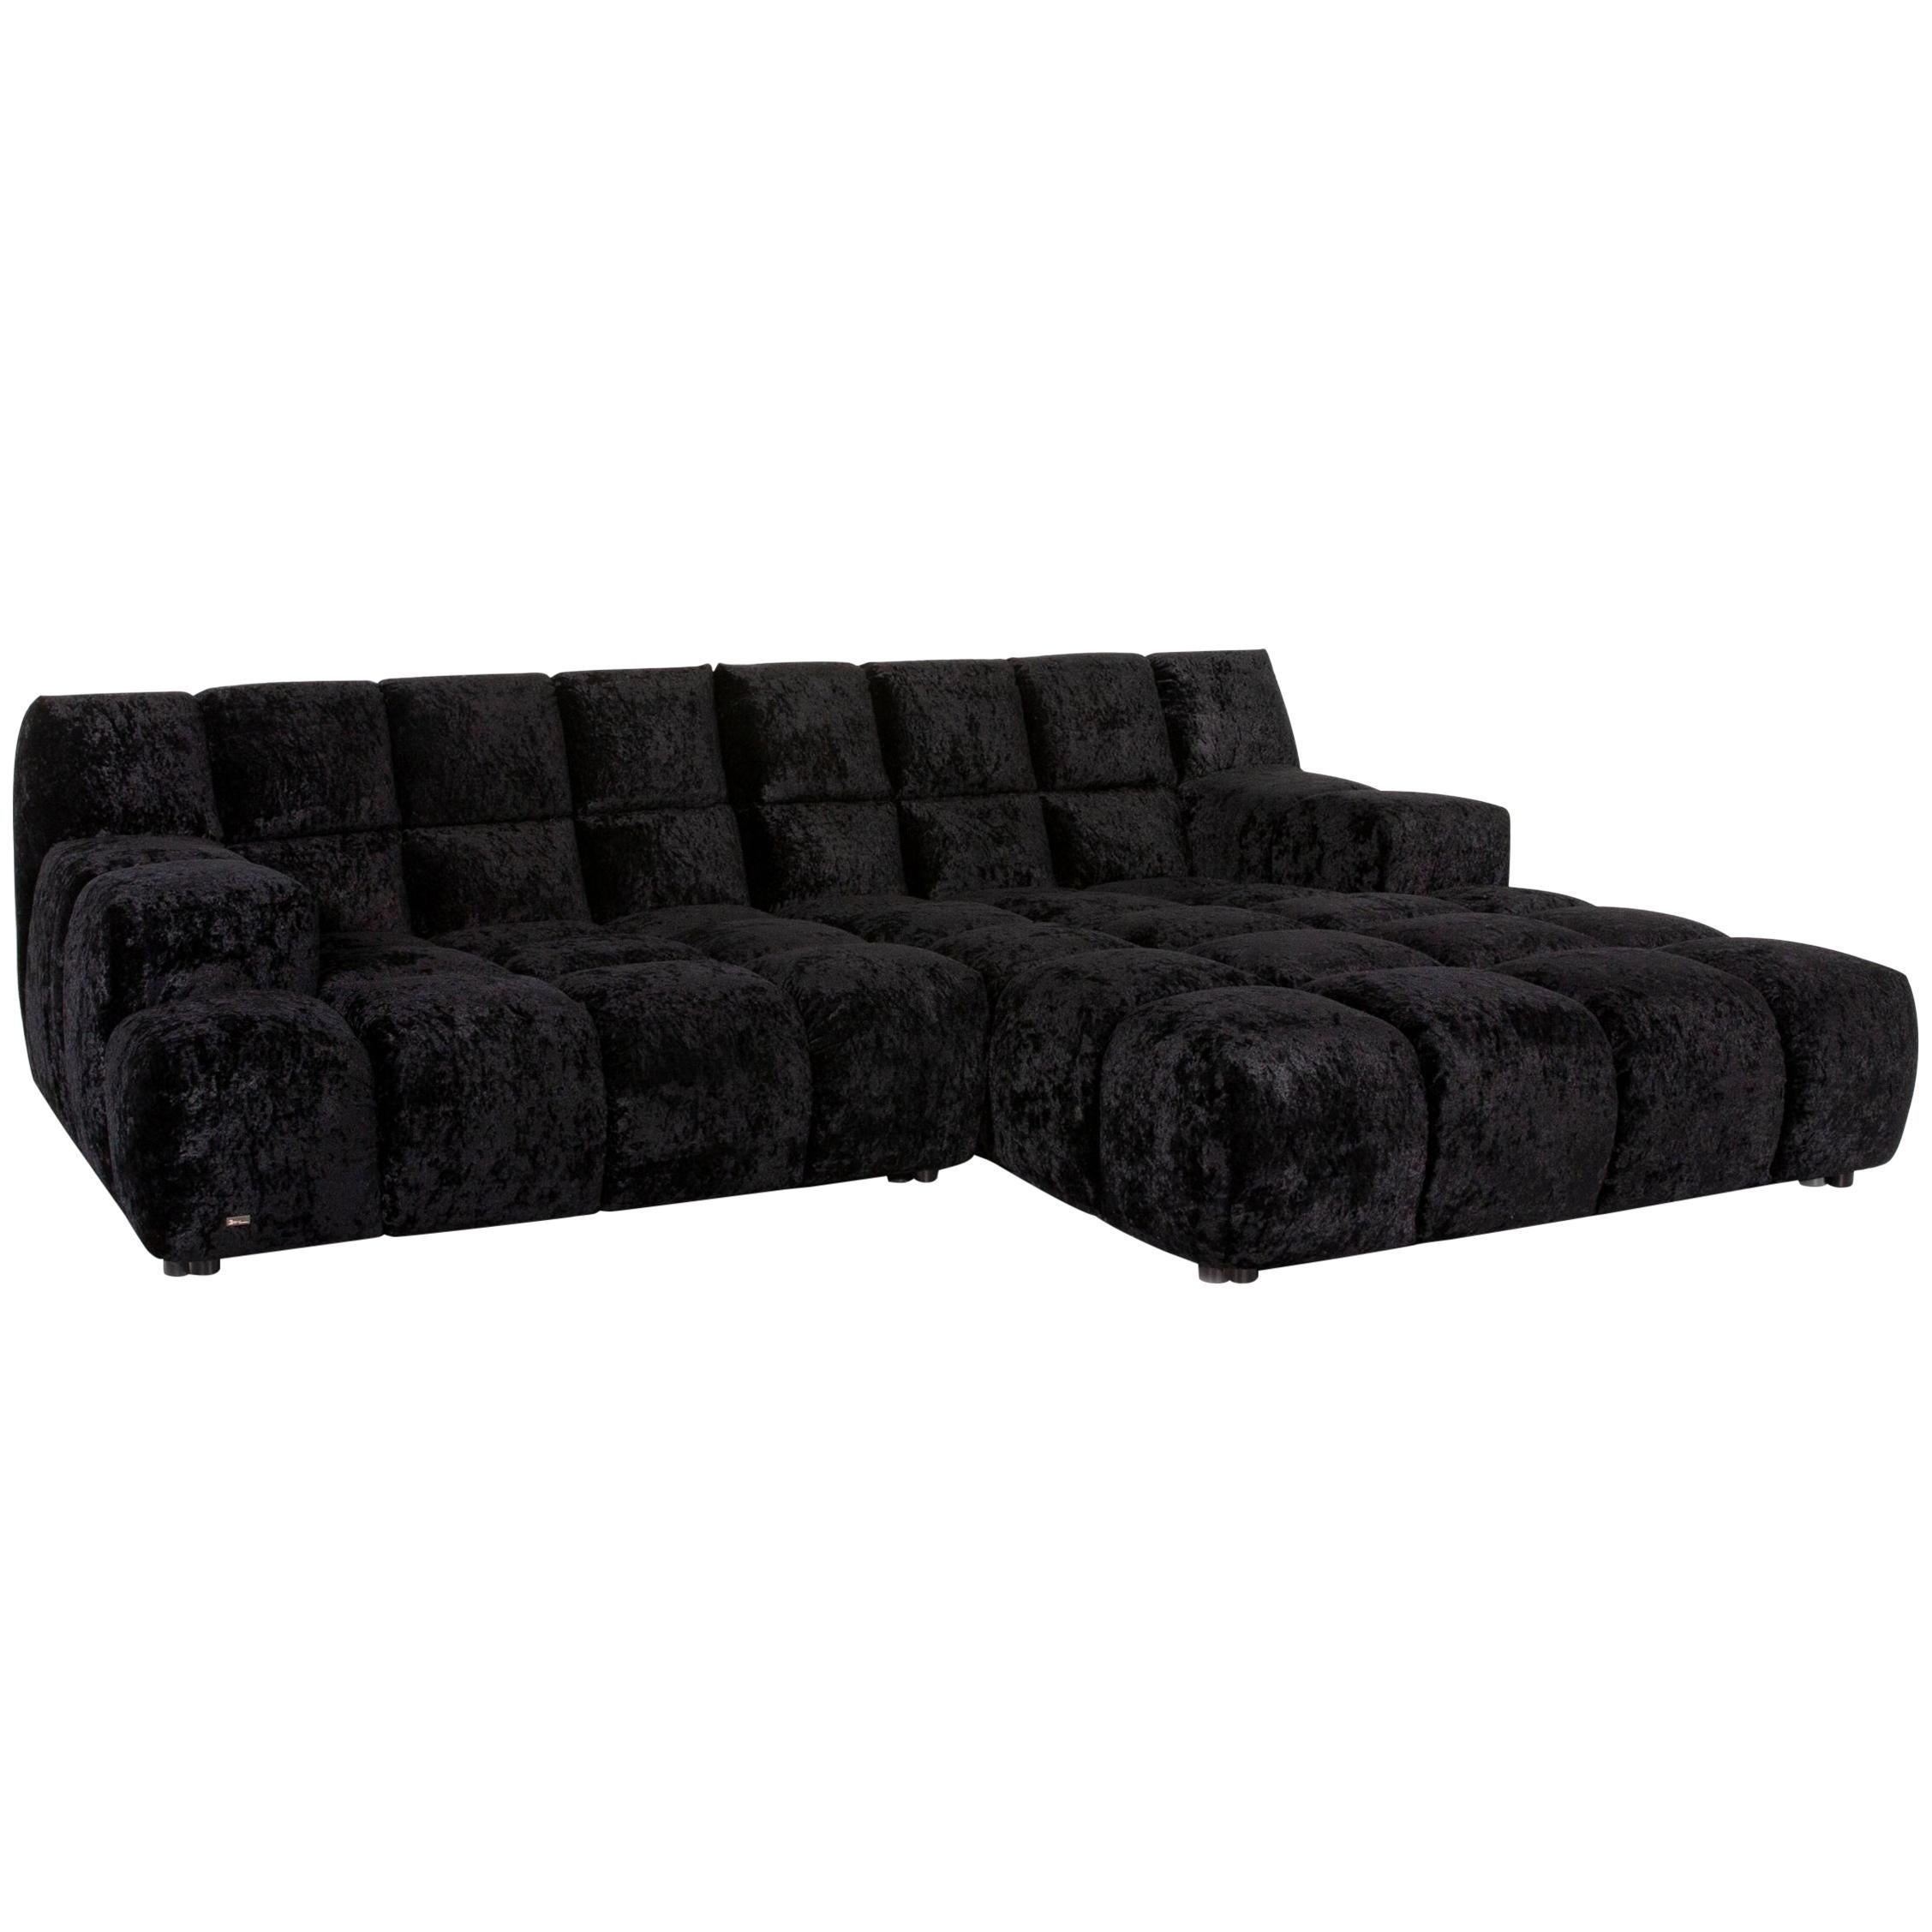 Bretz Ocean 7 Velvet Fabric Corner Sofa Black Sofa Couch Modular